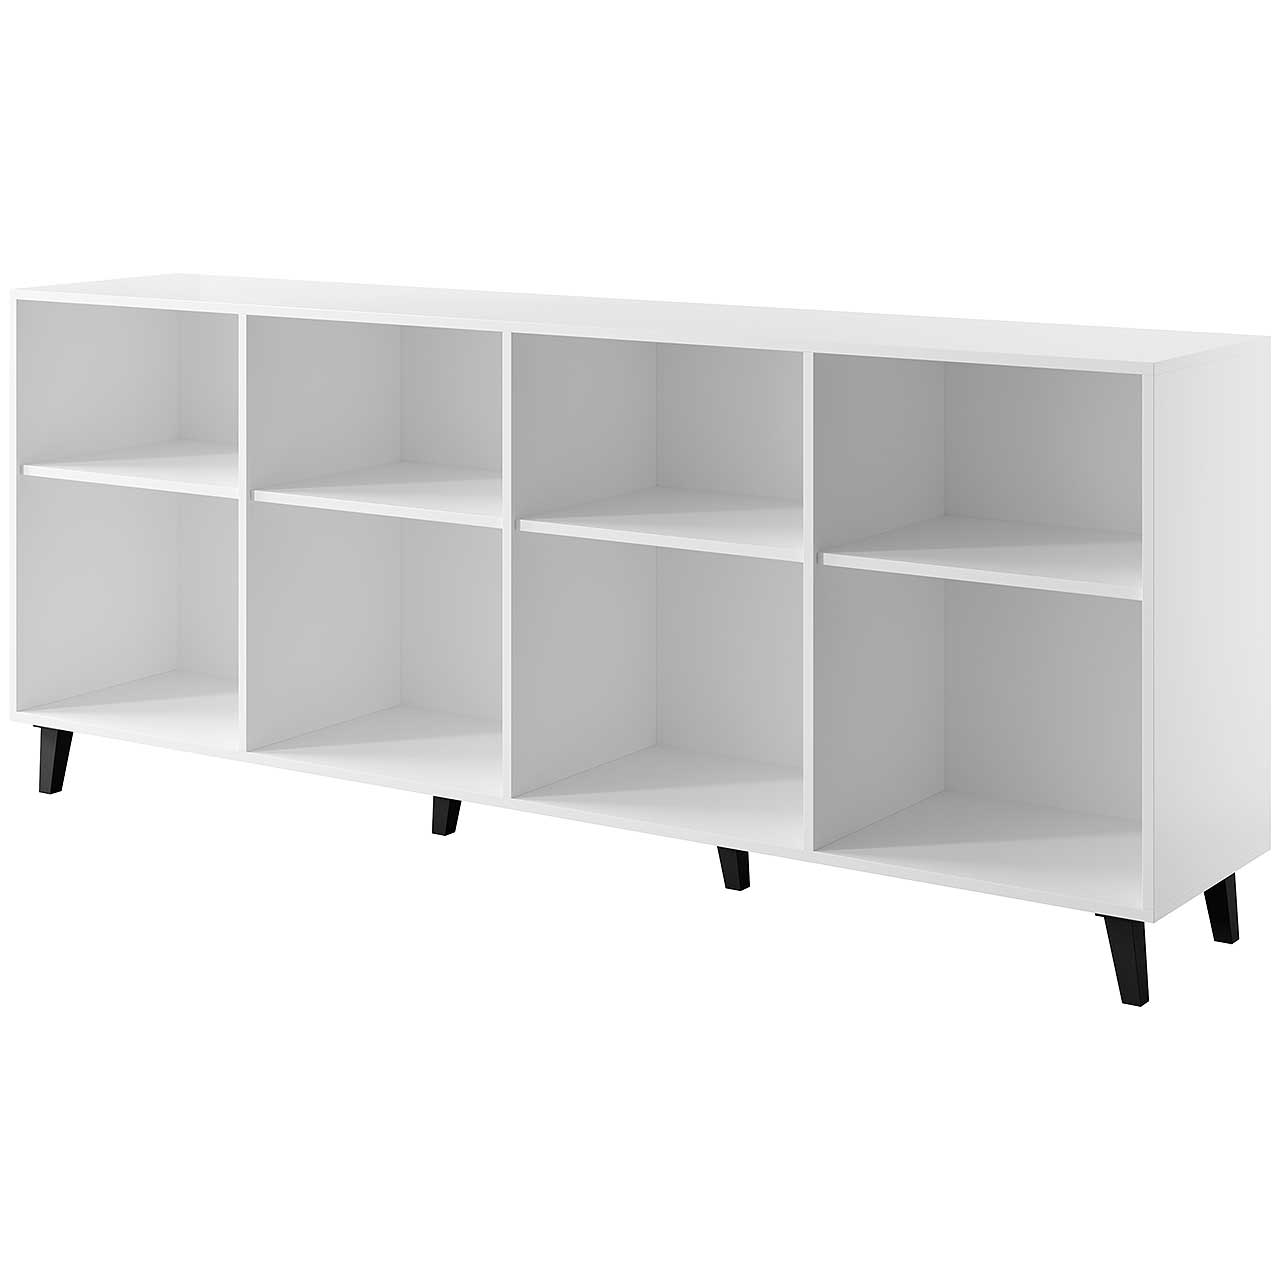 Storage cabinet BARI white matt